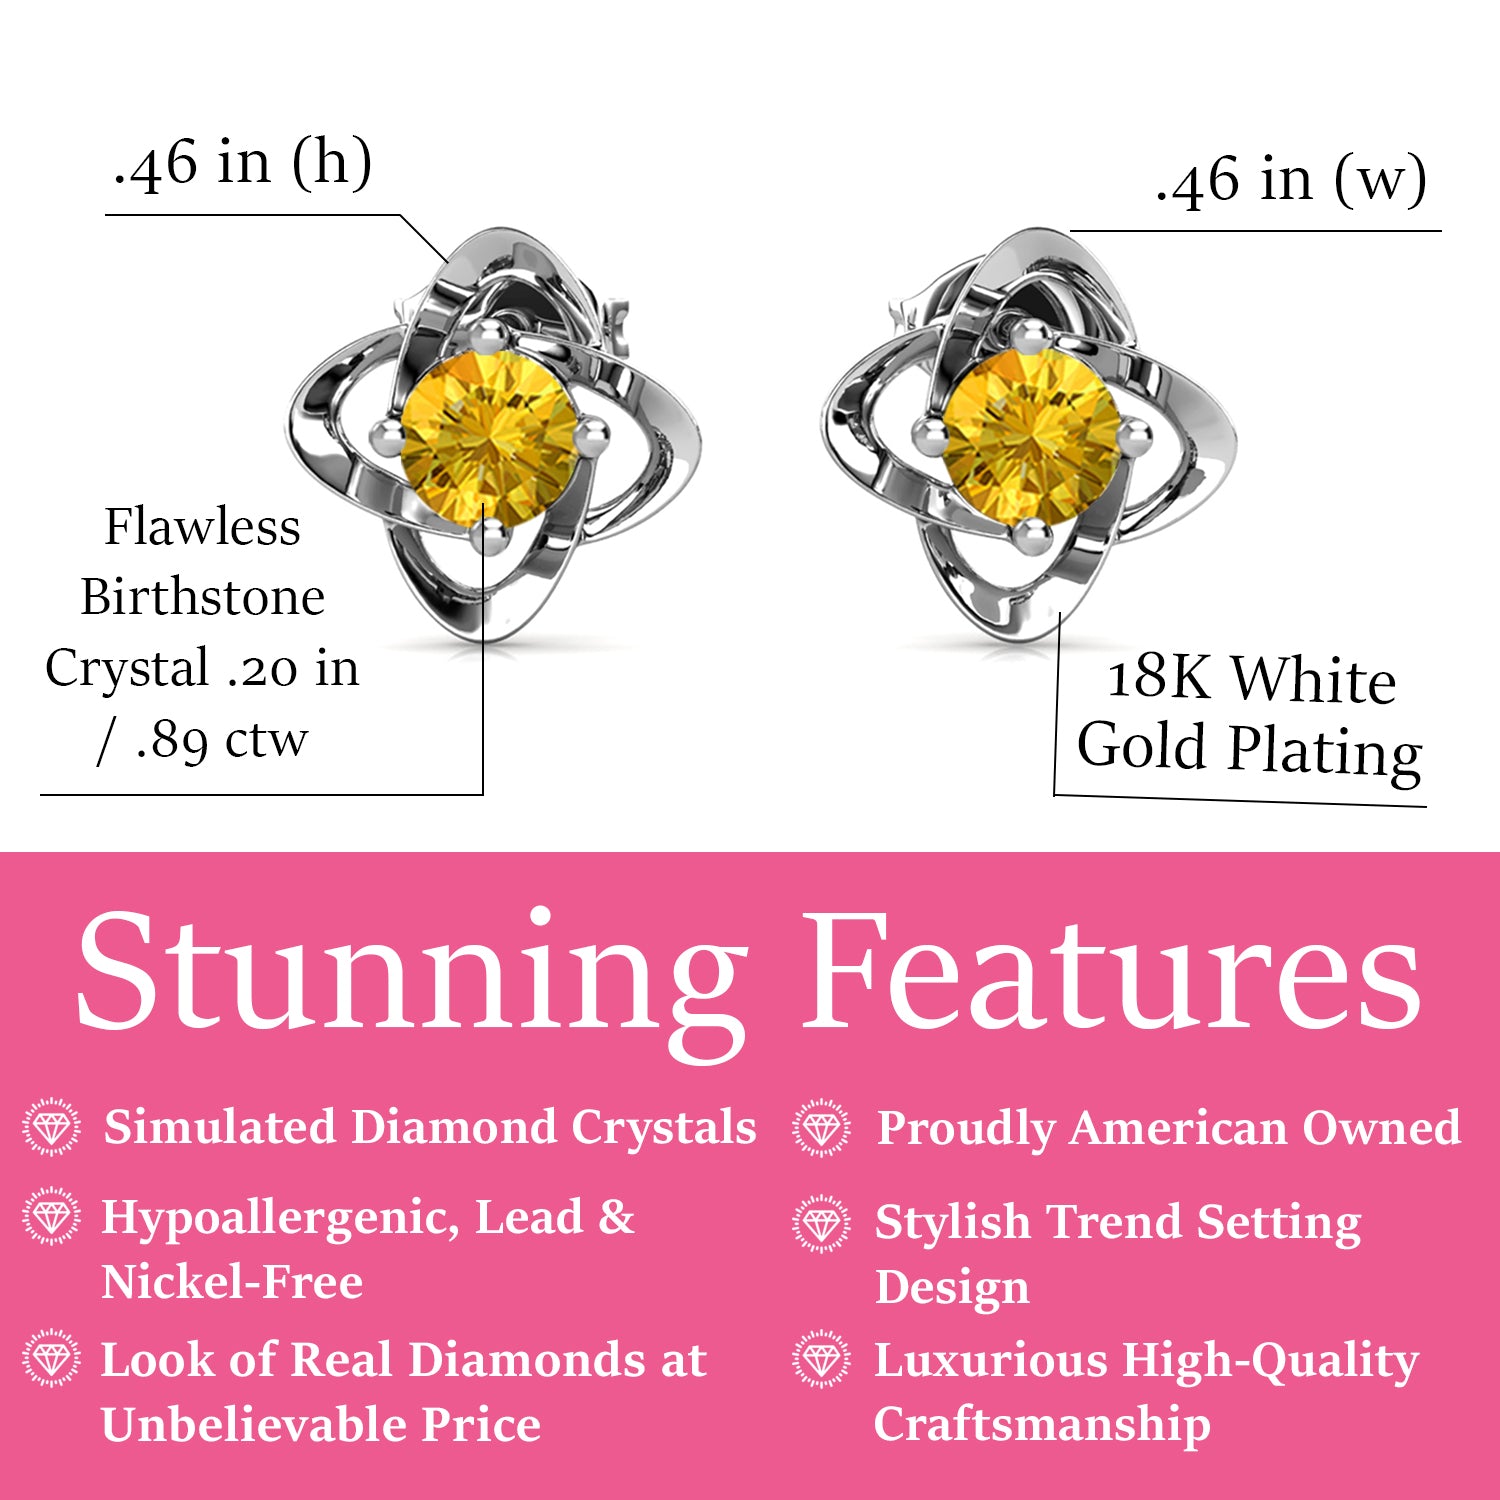 Infinity 十一月生日石黄水晶耳环，18k 白金镀银生日石耳环带水晶